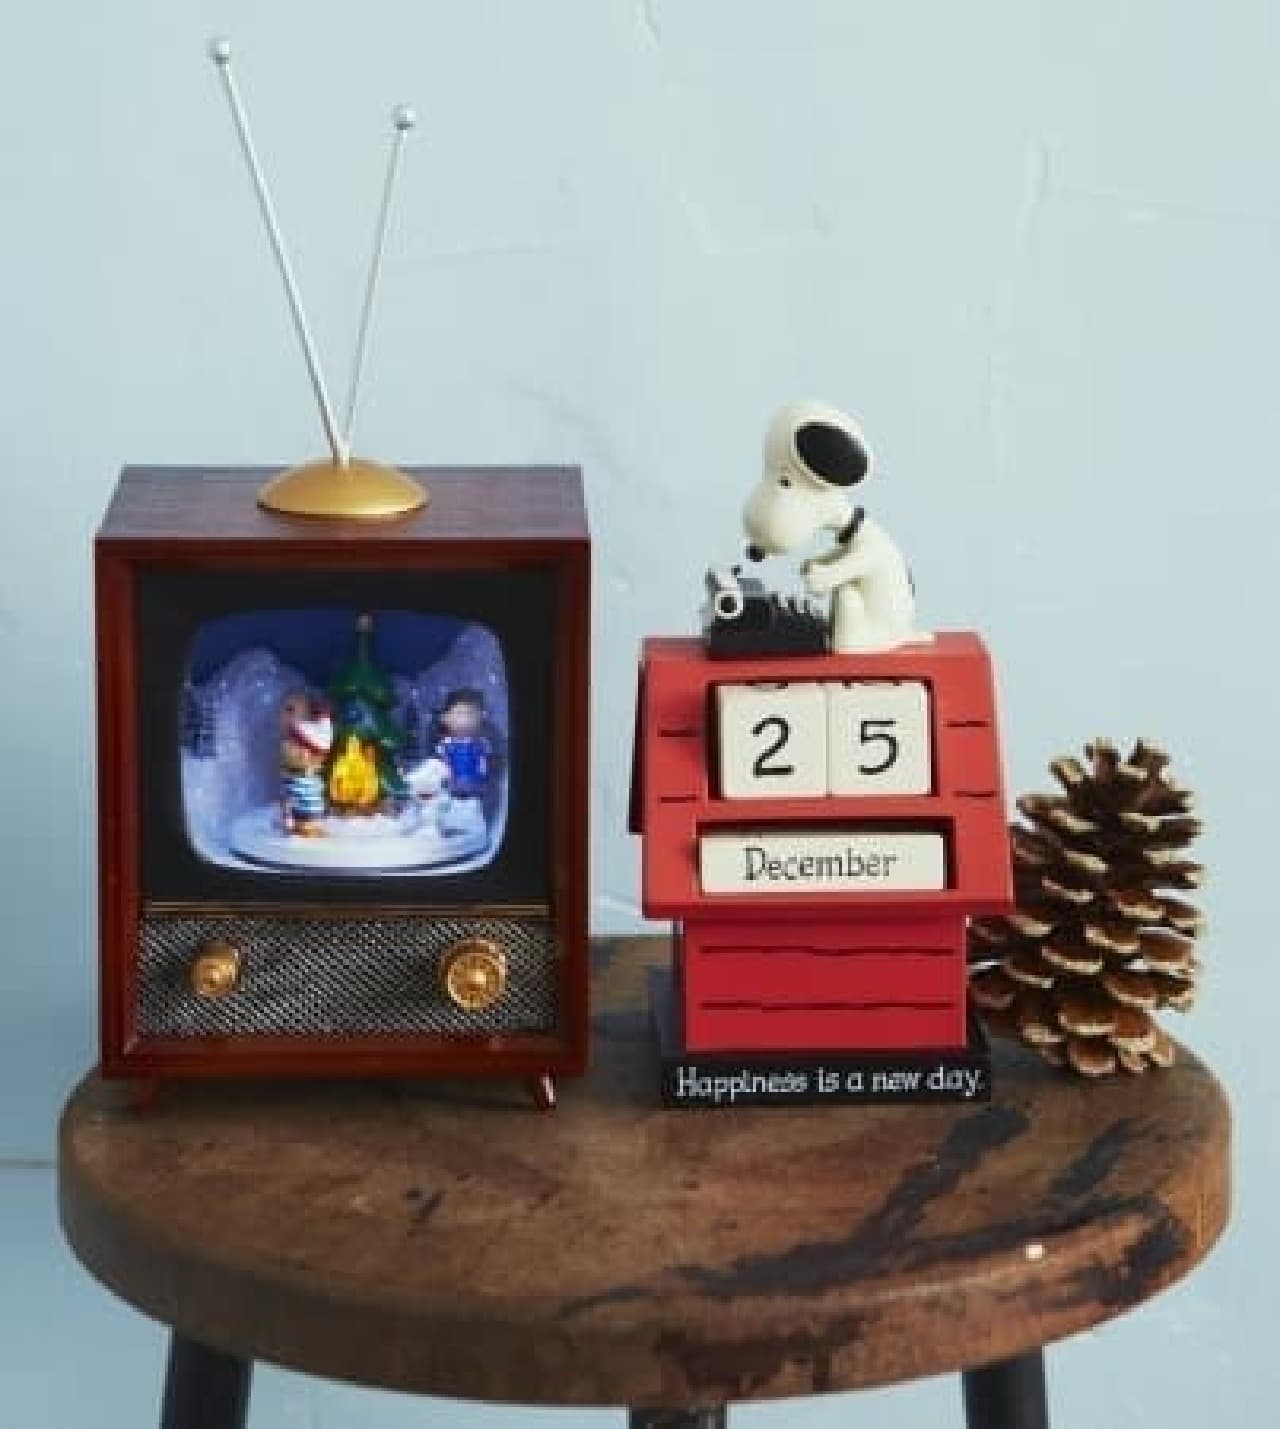 (Left) Snoopy TV music box 13,500 yen (Right) Peanuts calendar 3,200 yen